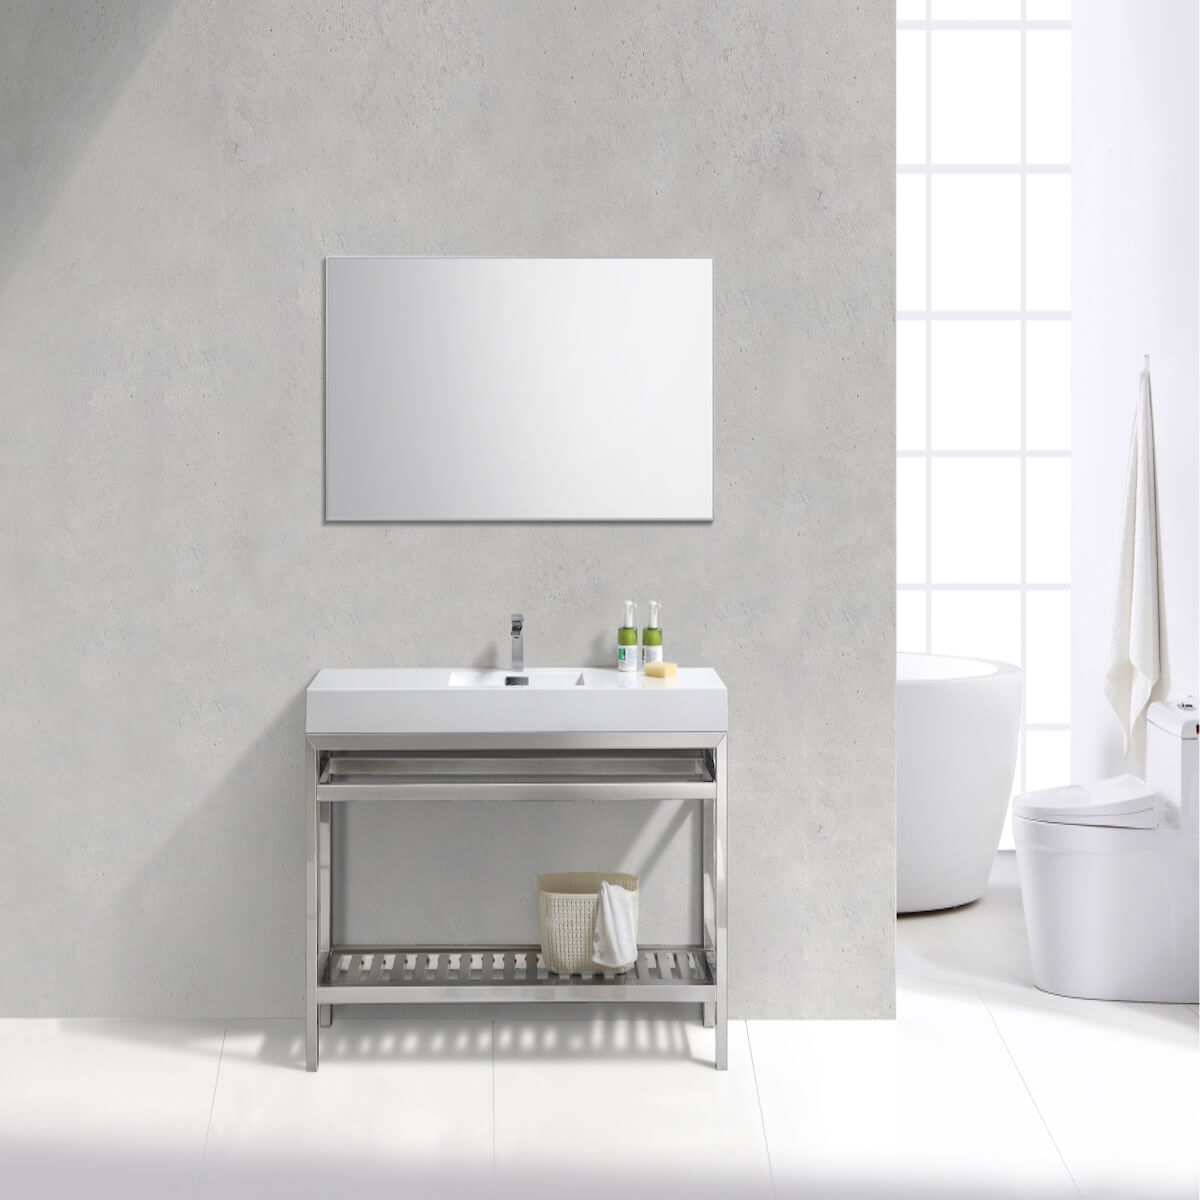 KubeBath Cisco 60” Chrome Stainless Steel Single Sink Console Vanity with Acrylic Sink AC60S in Bathroom